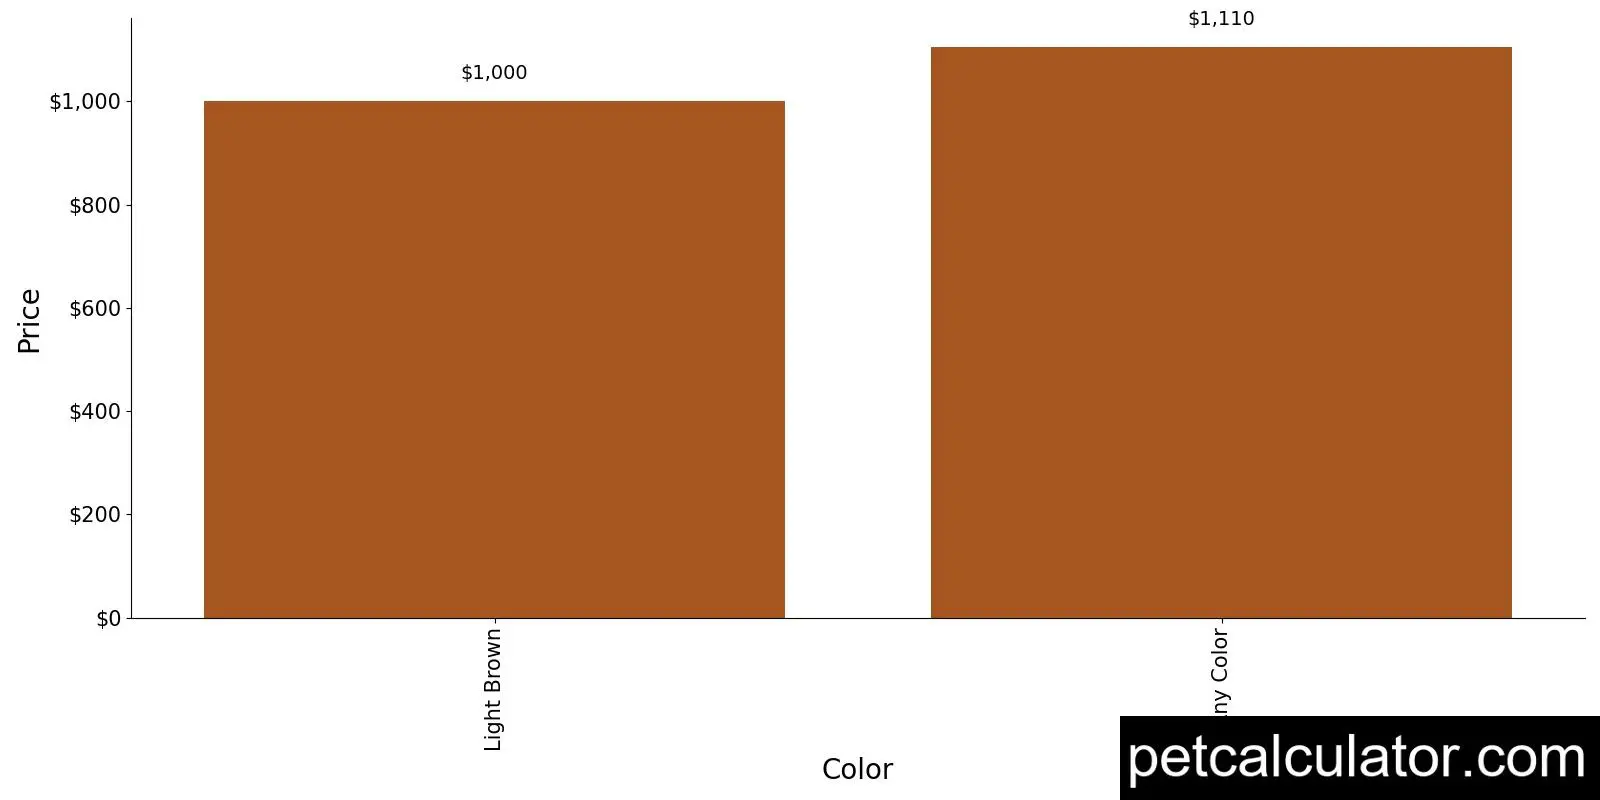 Price of Ori Pei by Color 